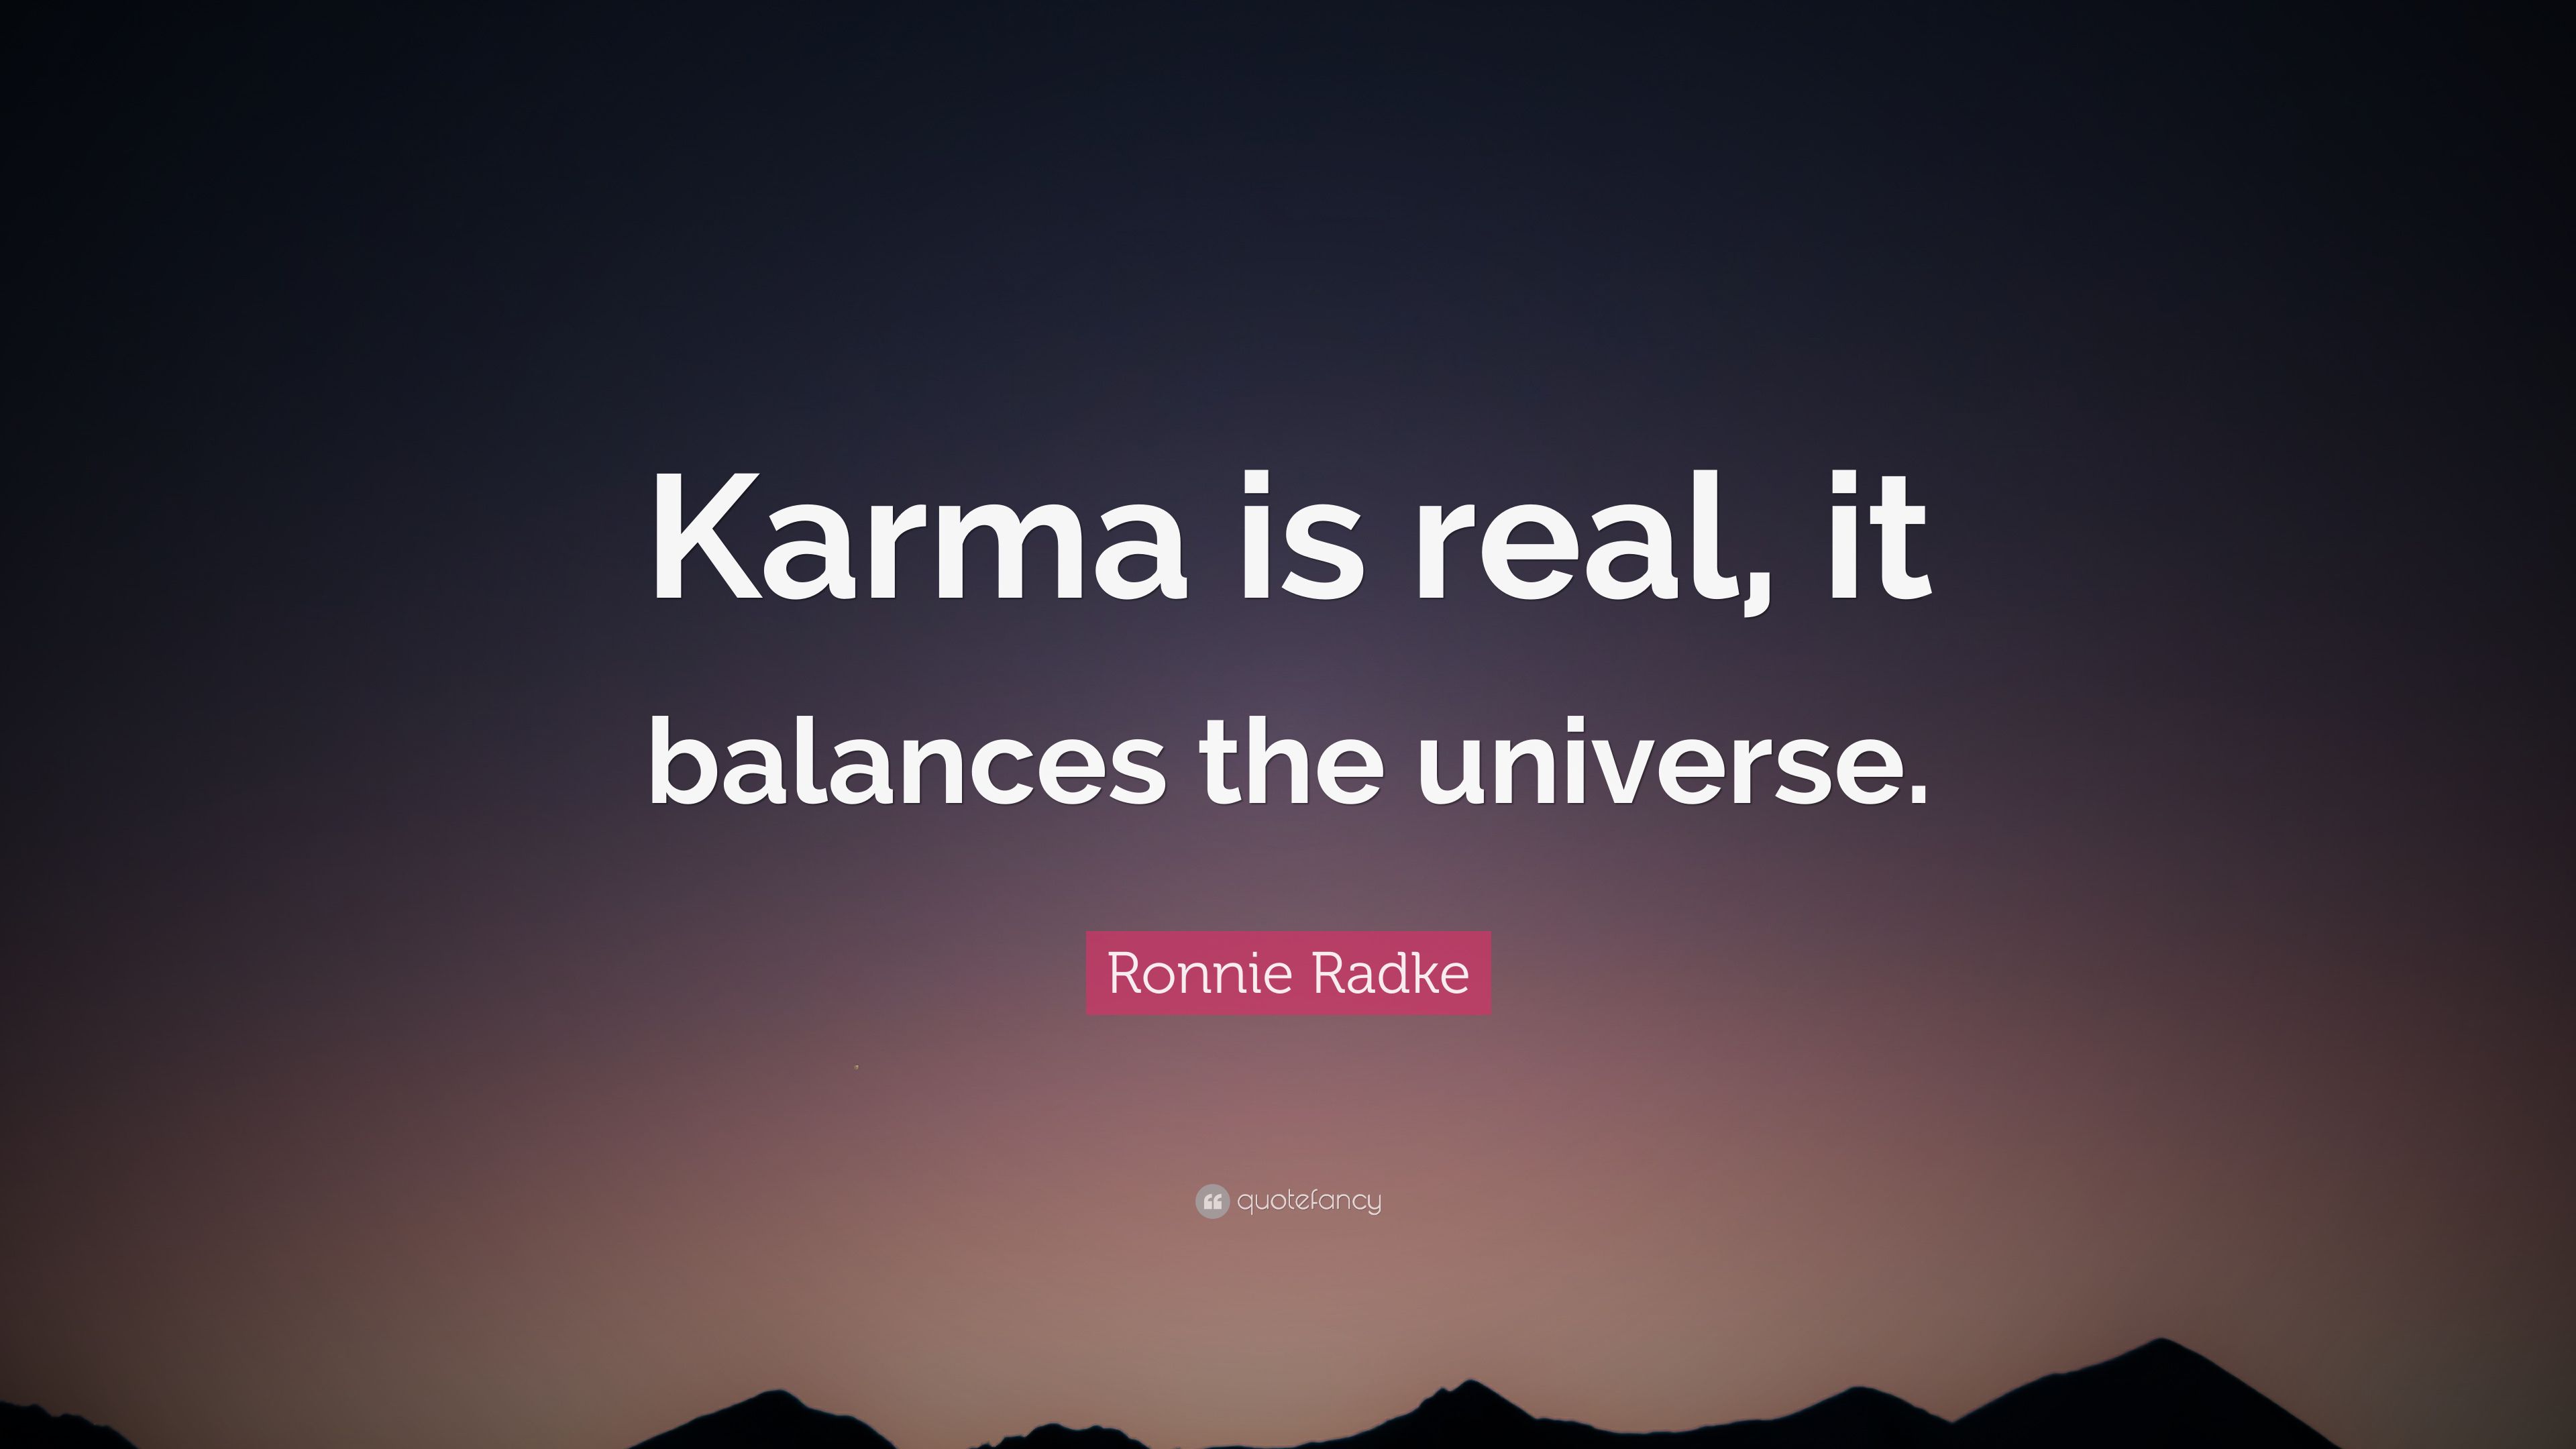 Ronnie Radke Quote: “Karma is real, it balances the universe.” (7 wallpaper)